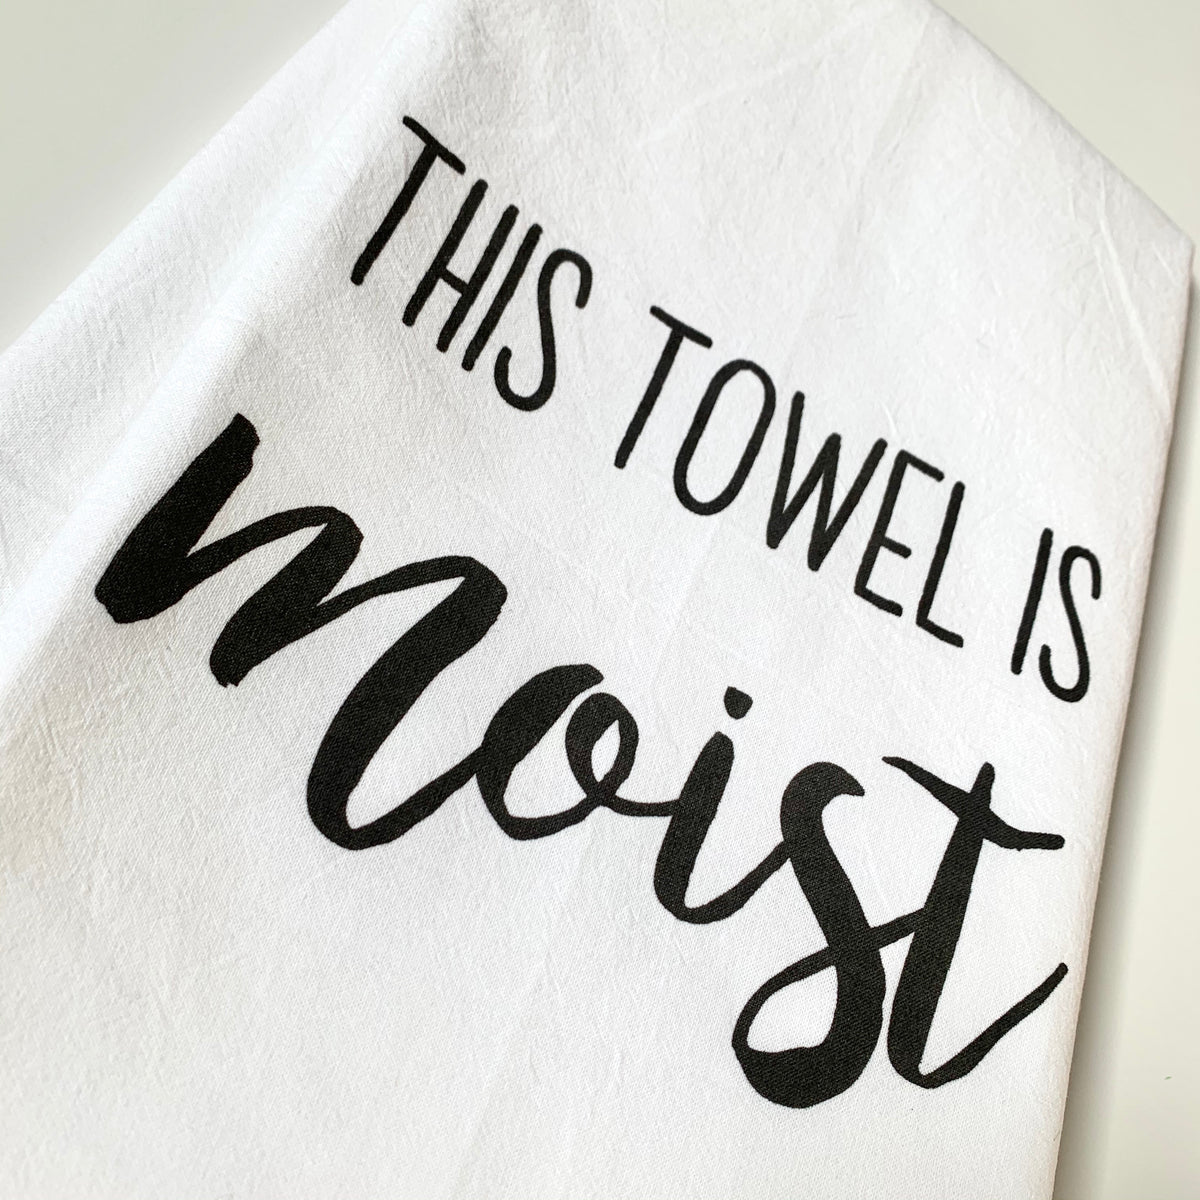 Tea Towel— This Towel is Moist